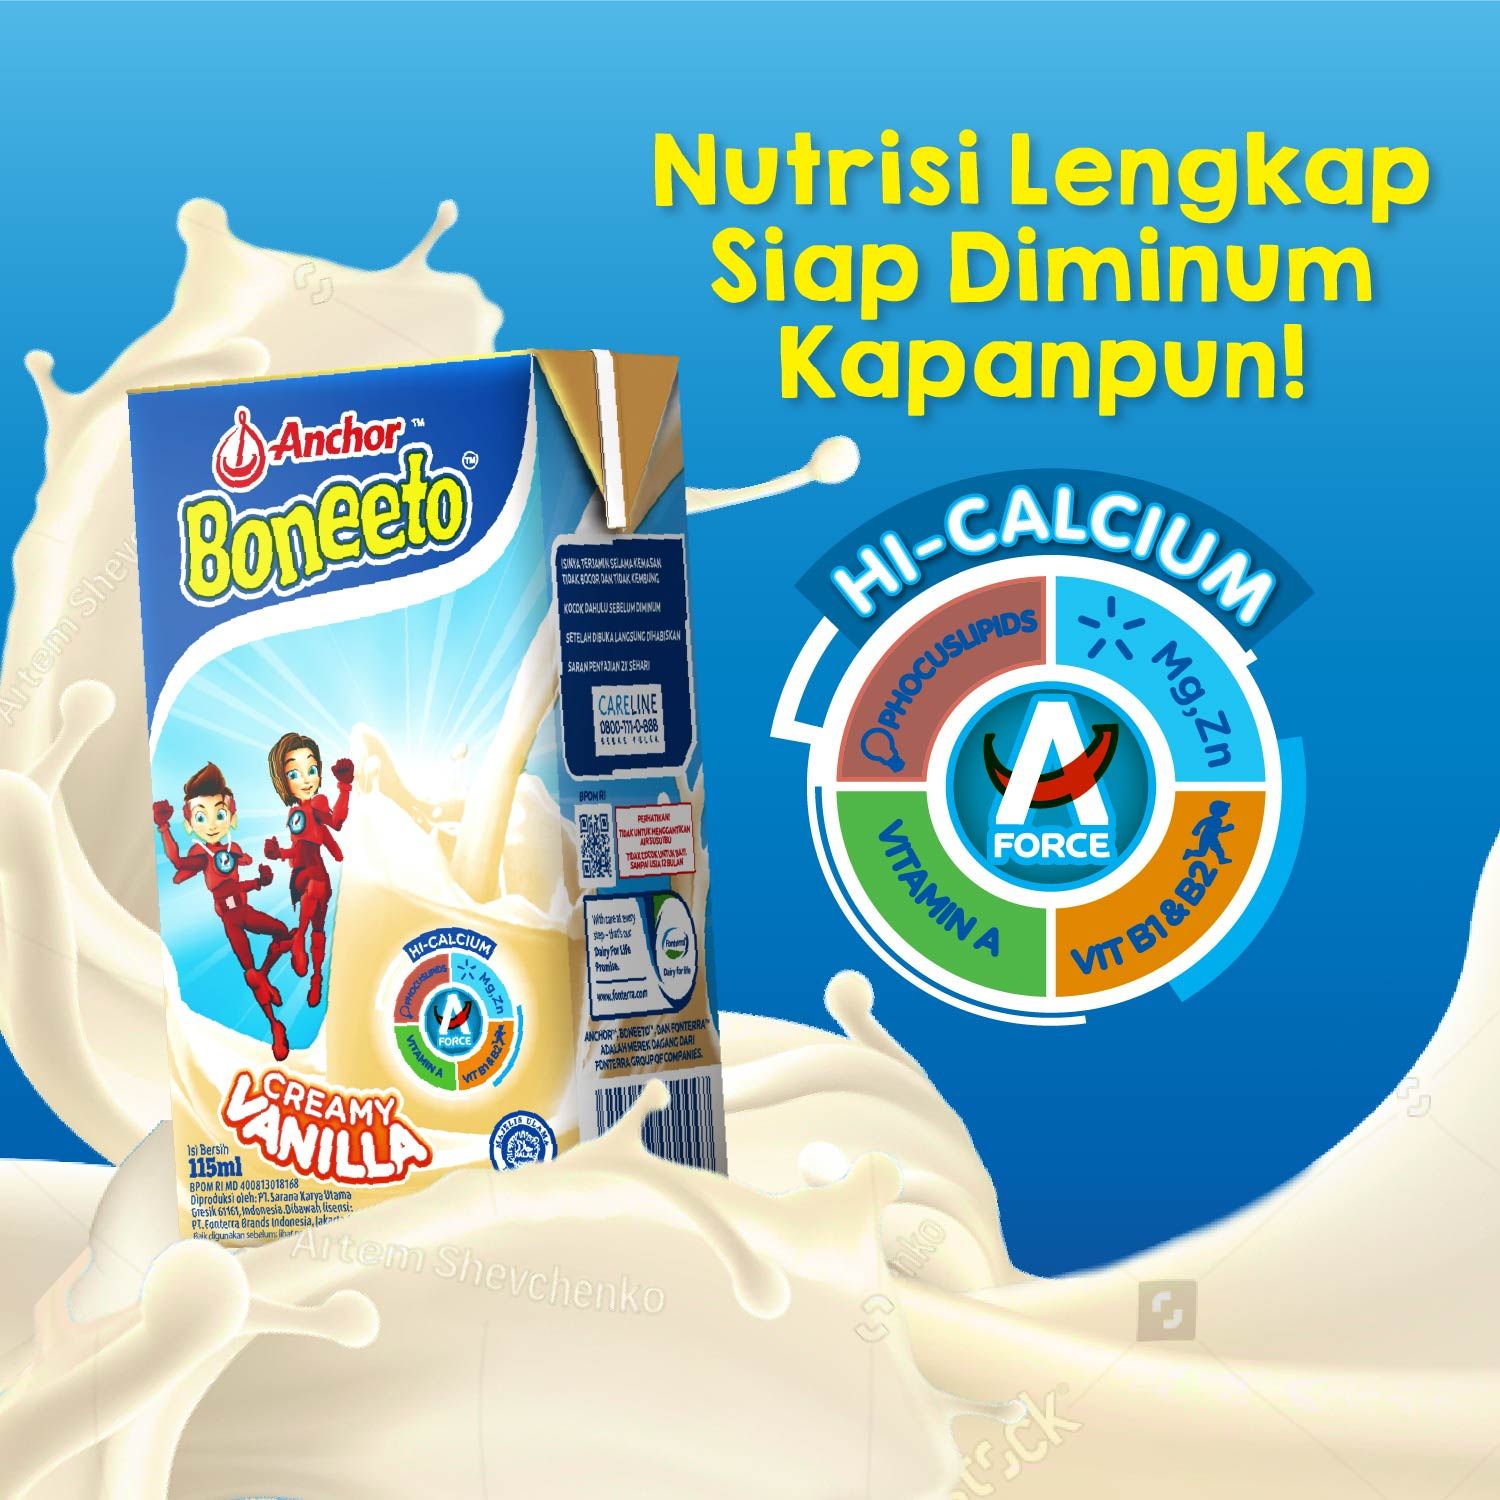 Anchor Boneeto UHT Creamy Vanilla 115ml - Susu Pertumbuhan Anak - 5